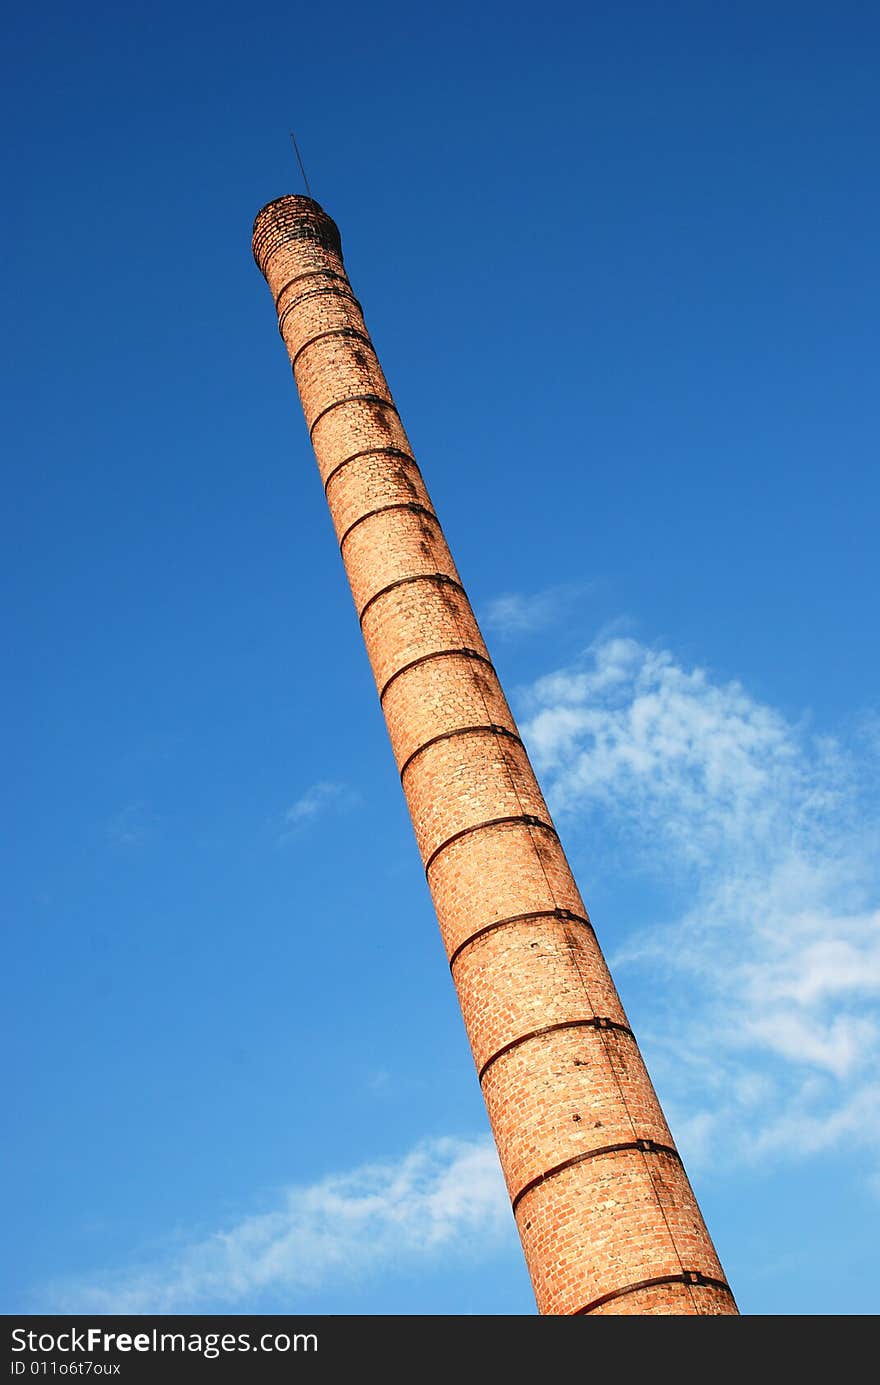 Tall brick tower towards the blue sky